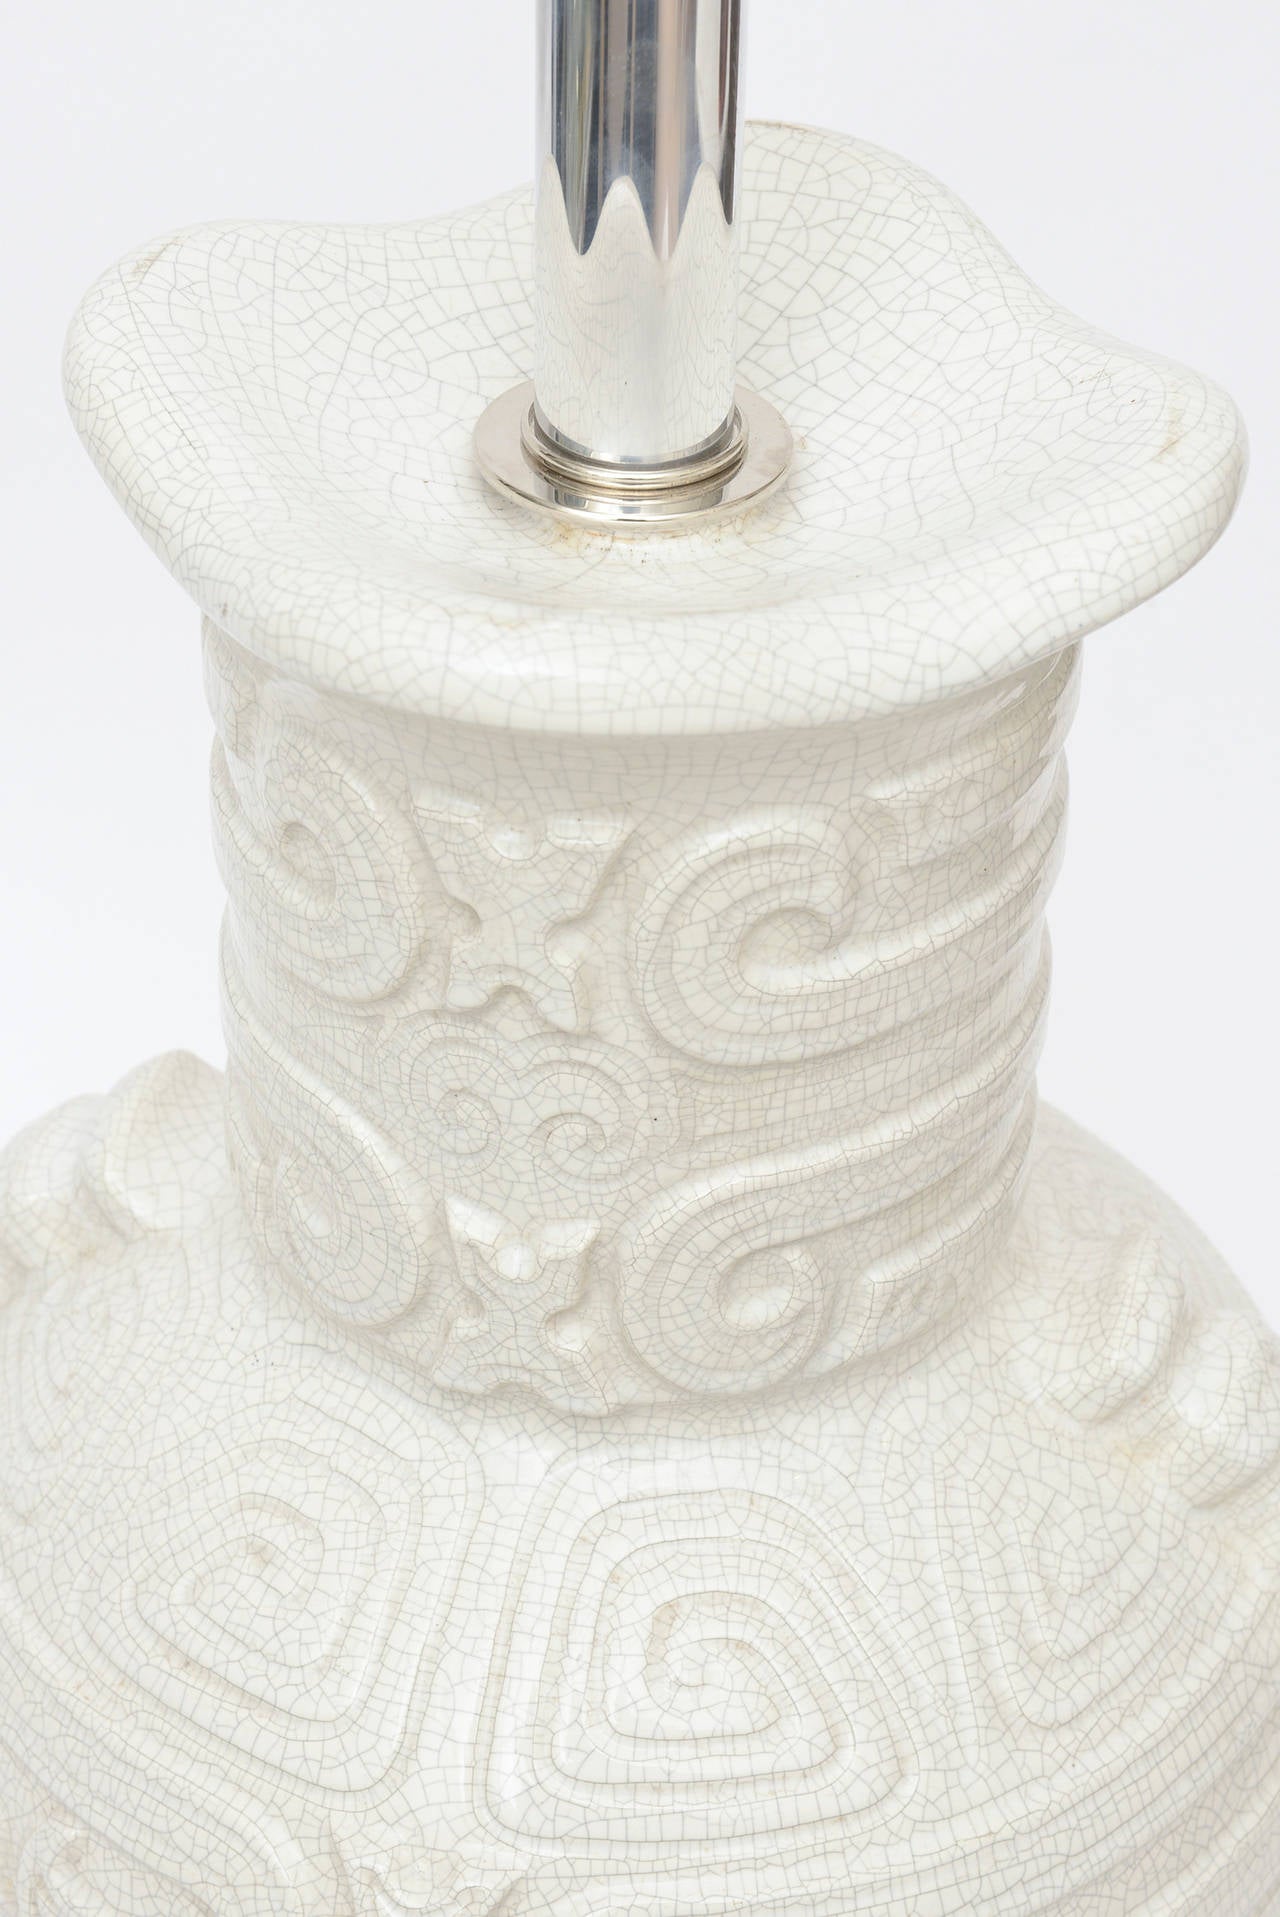 Glazed Crackled Studio Ceramic Off White and Gray Lamp Italian Vintage For Sale 3